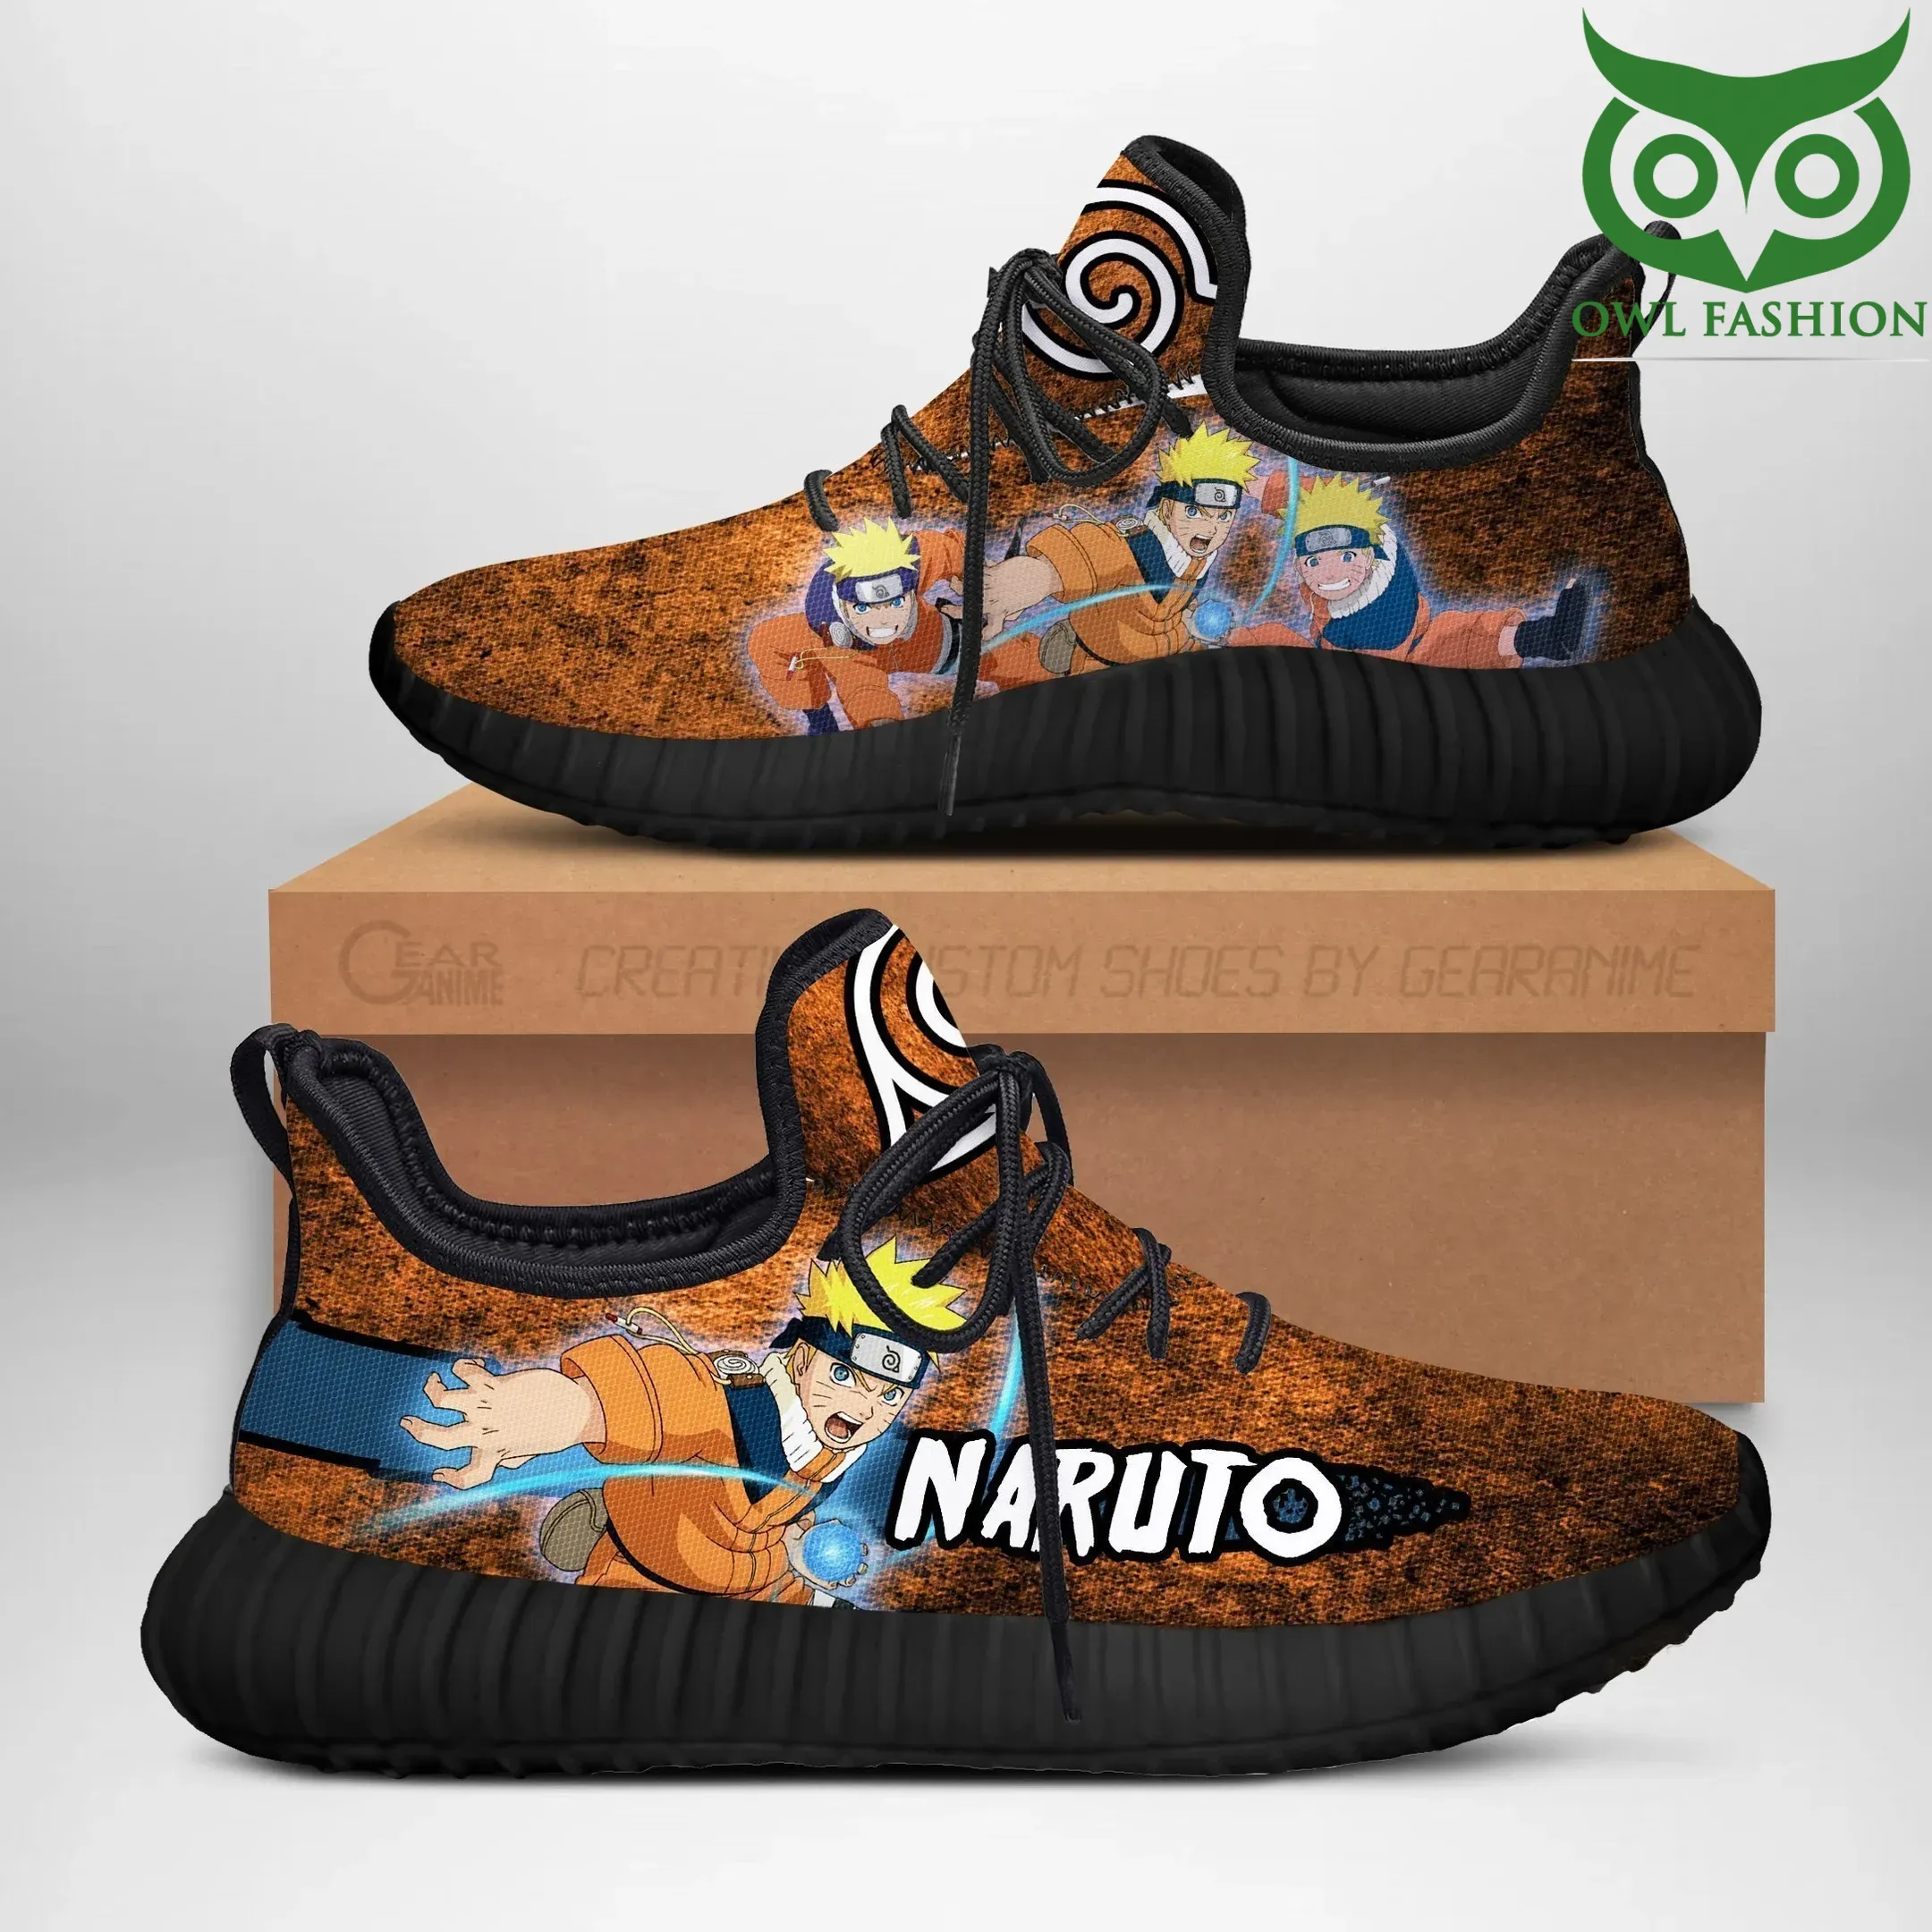 49 Naruto Jutsu Reze Shoes Naruto Anime Shoes Fan Gift Idea